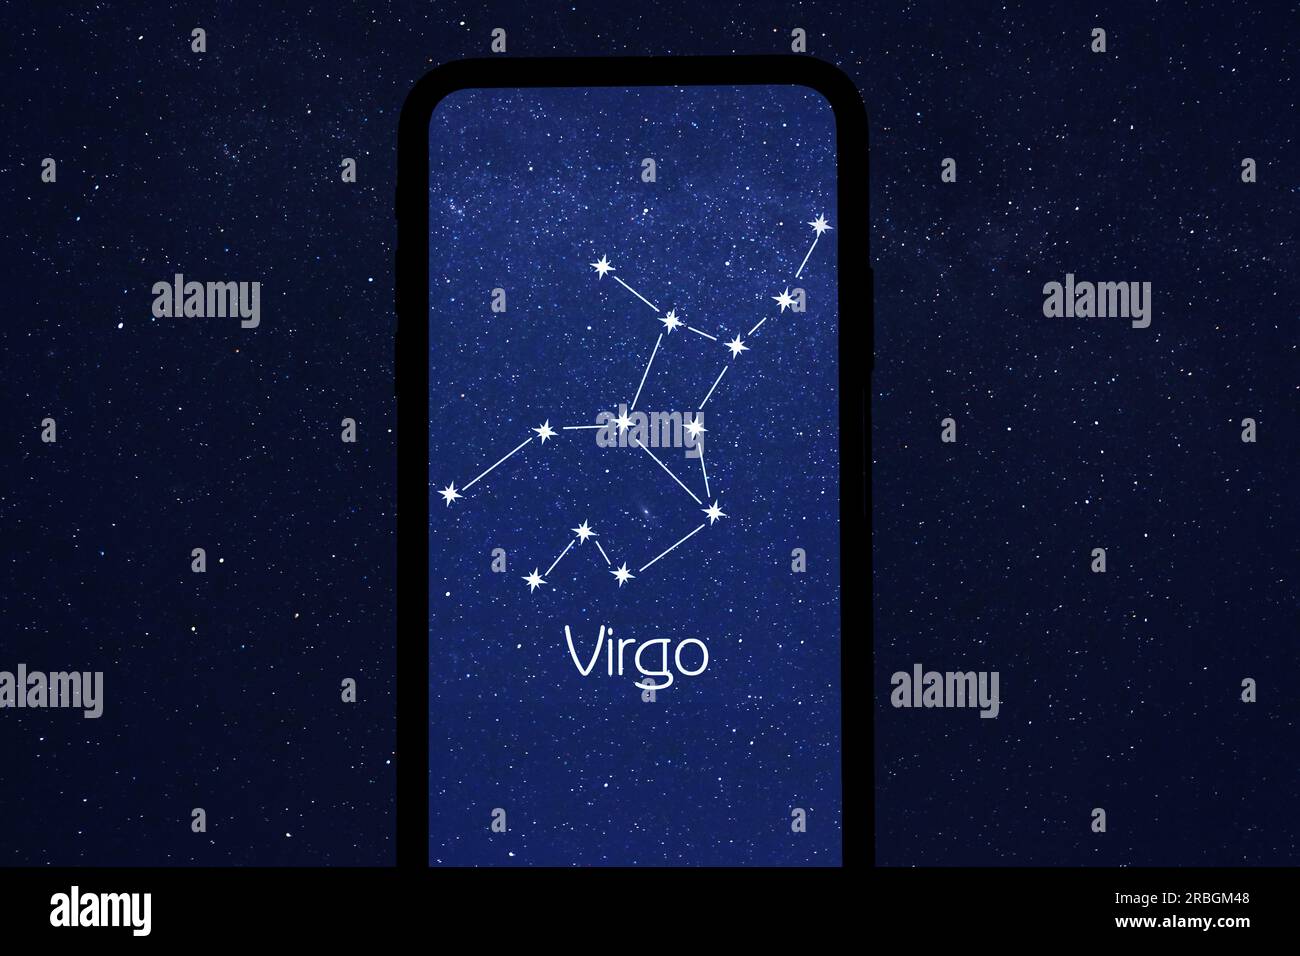 Identified by stargazing app stick figure pattern of Virgo constellation on phone screen on at night, closeup Stock Photo